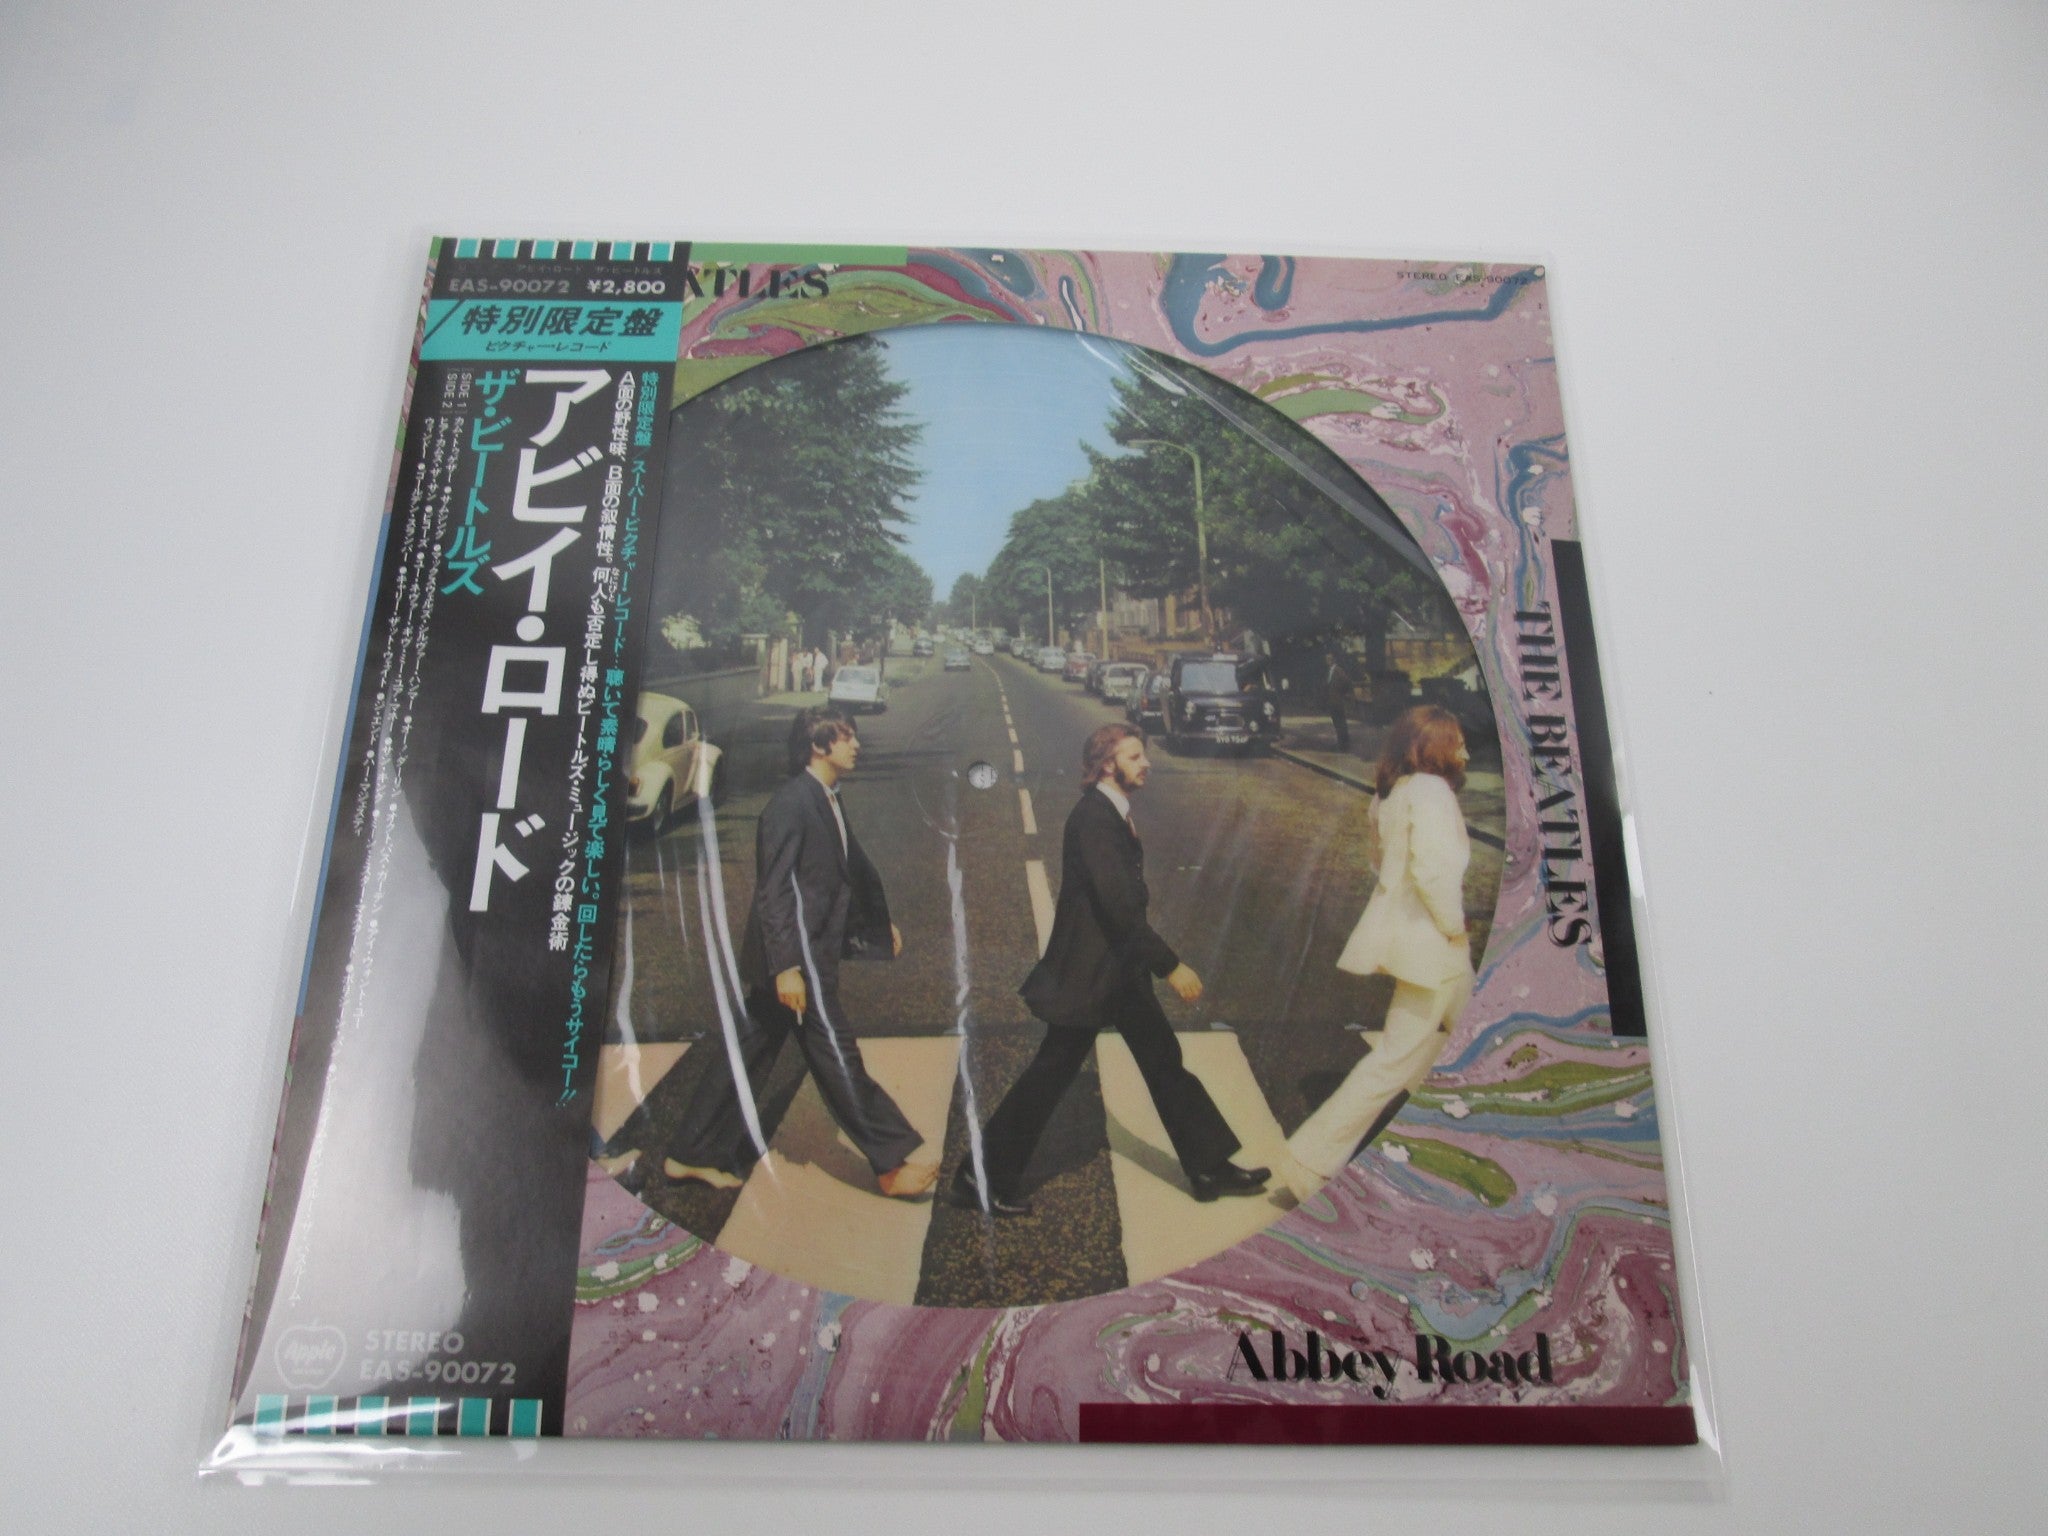 BEATLES ABBEY ROAD Picture disc APPLE EAS-90072 with OBI Japan LP